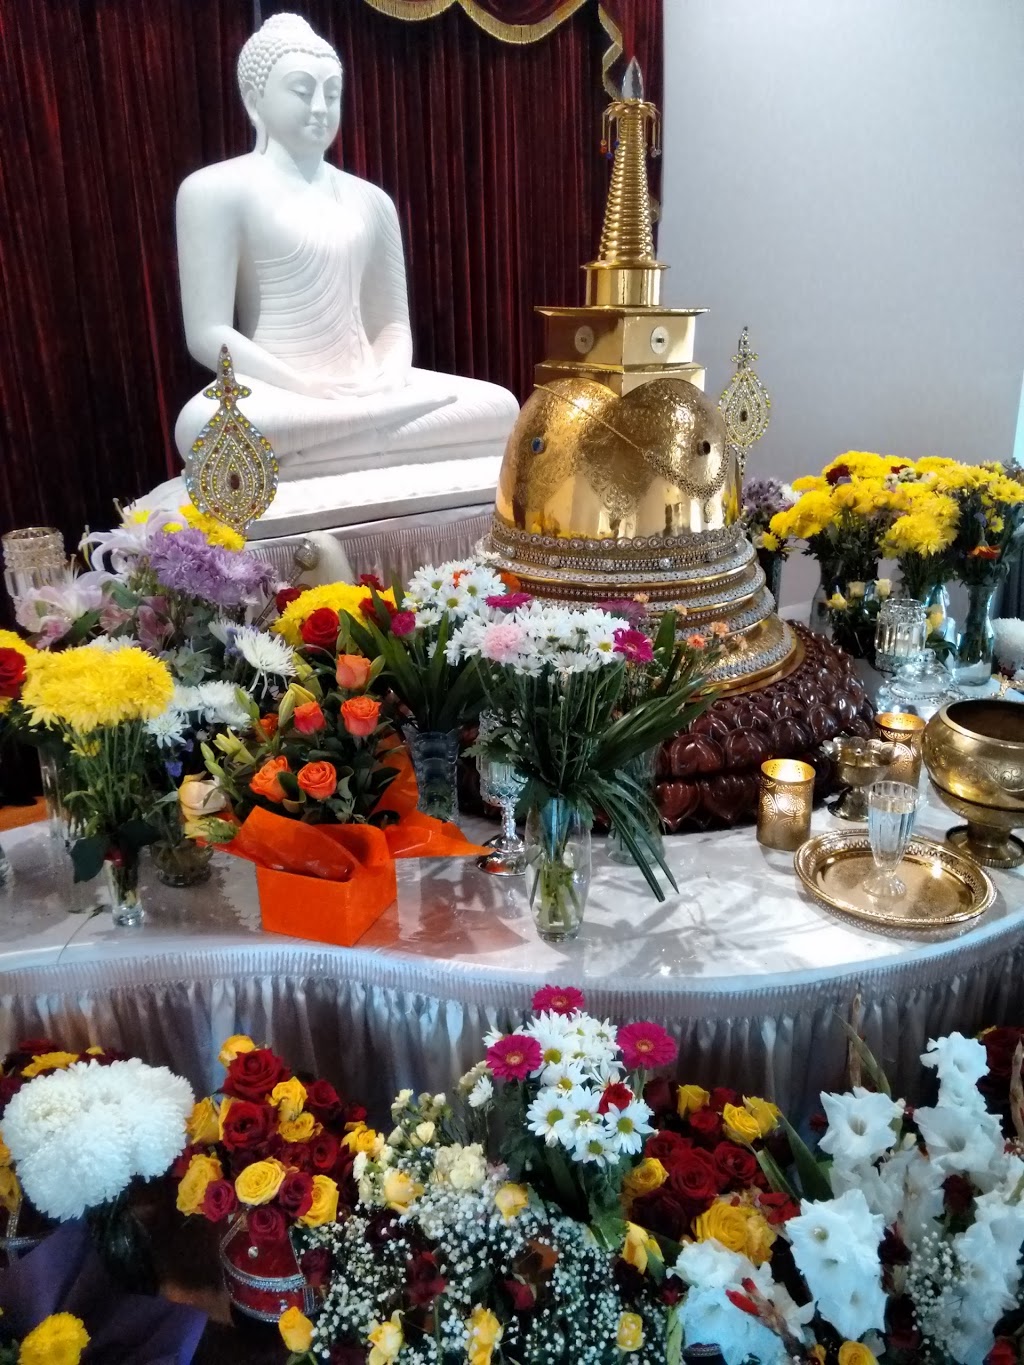 Mahamevnawa Buddhist Meditation Centre | health | 105 Wisemans Ferry Rd, Cattai NSW 2756, Australia | 0245728872 OR +61 2 4572 8872